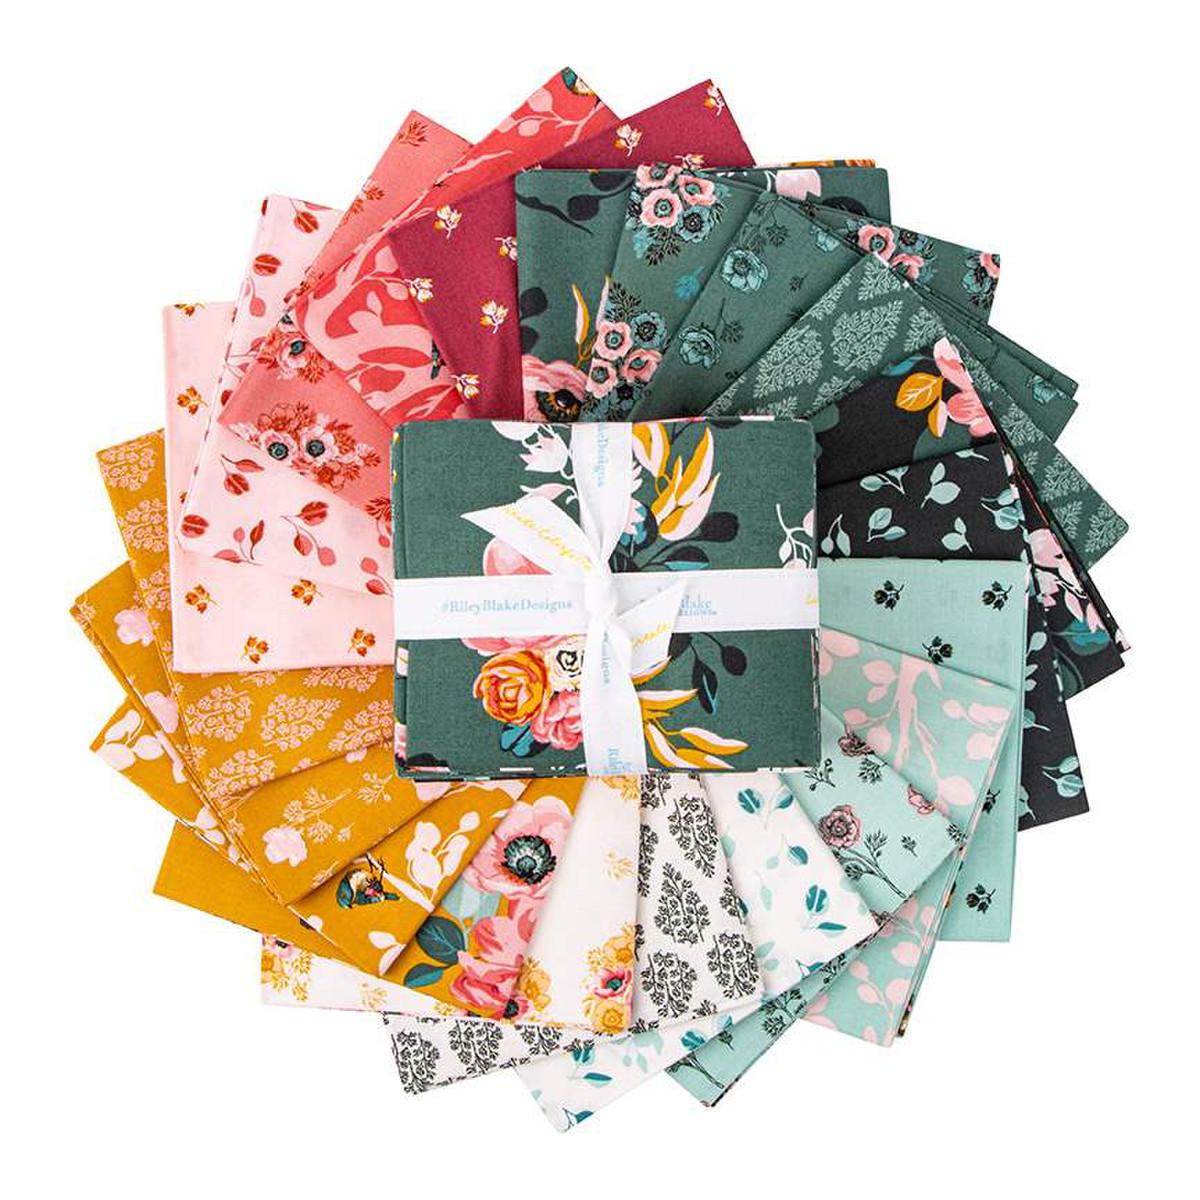 CJINZHI Fat Quarters 織物束,14 件 19.69 x 19.69 英吋(50 x 50  公分)棉質織物絎縫方形大量預切拼布四分之一床單,適用於縫紉圖案捆,紅色、灰色、藍色花卉